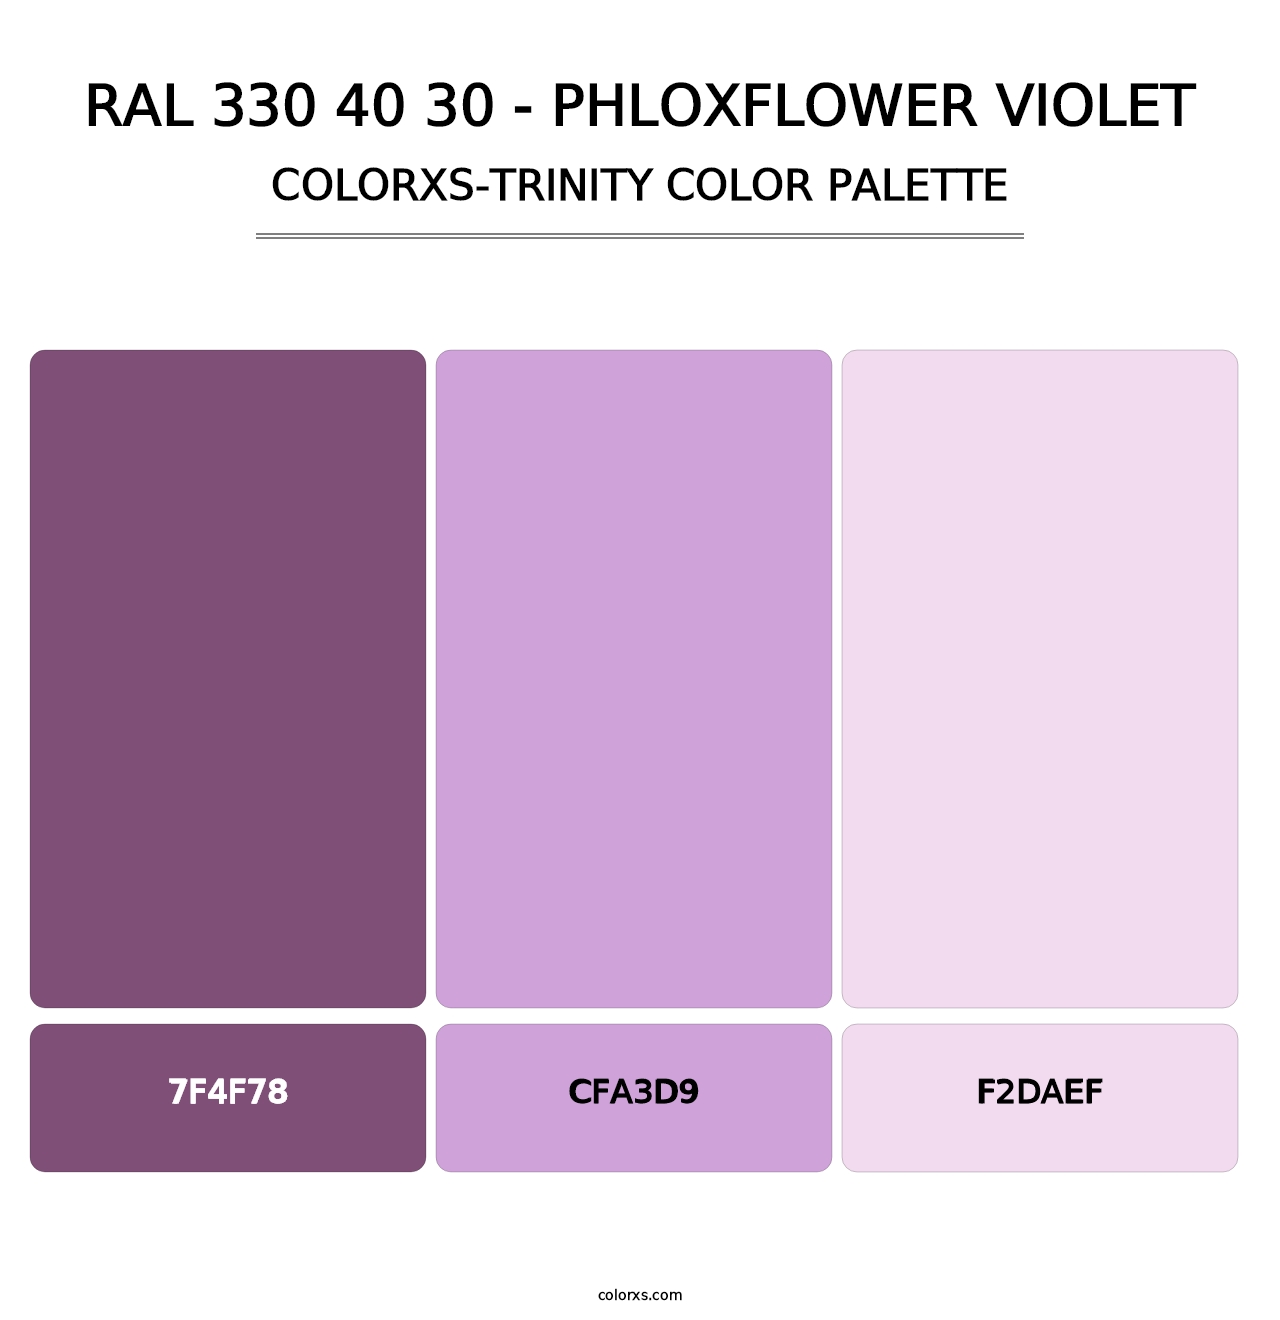 RAL 330 40 30 - Phloxflower Violet - Colorxs Trinity Palette